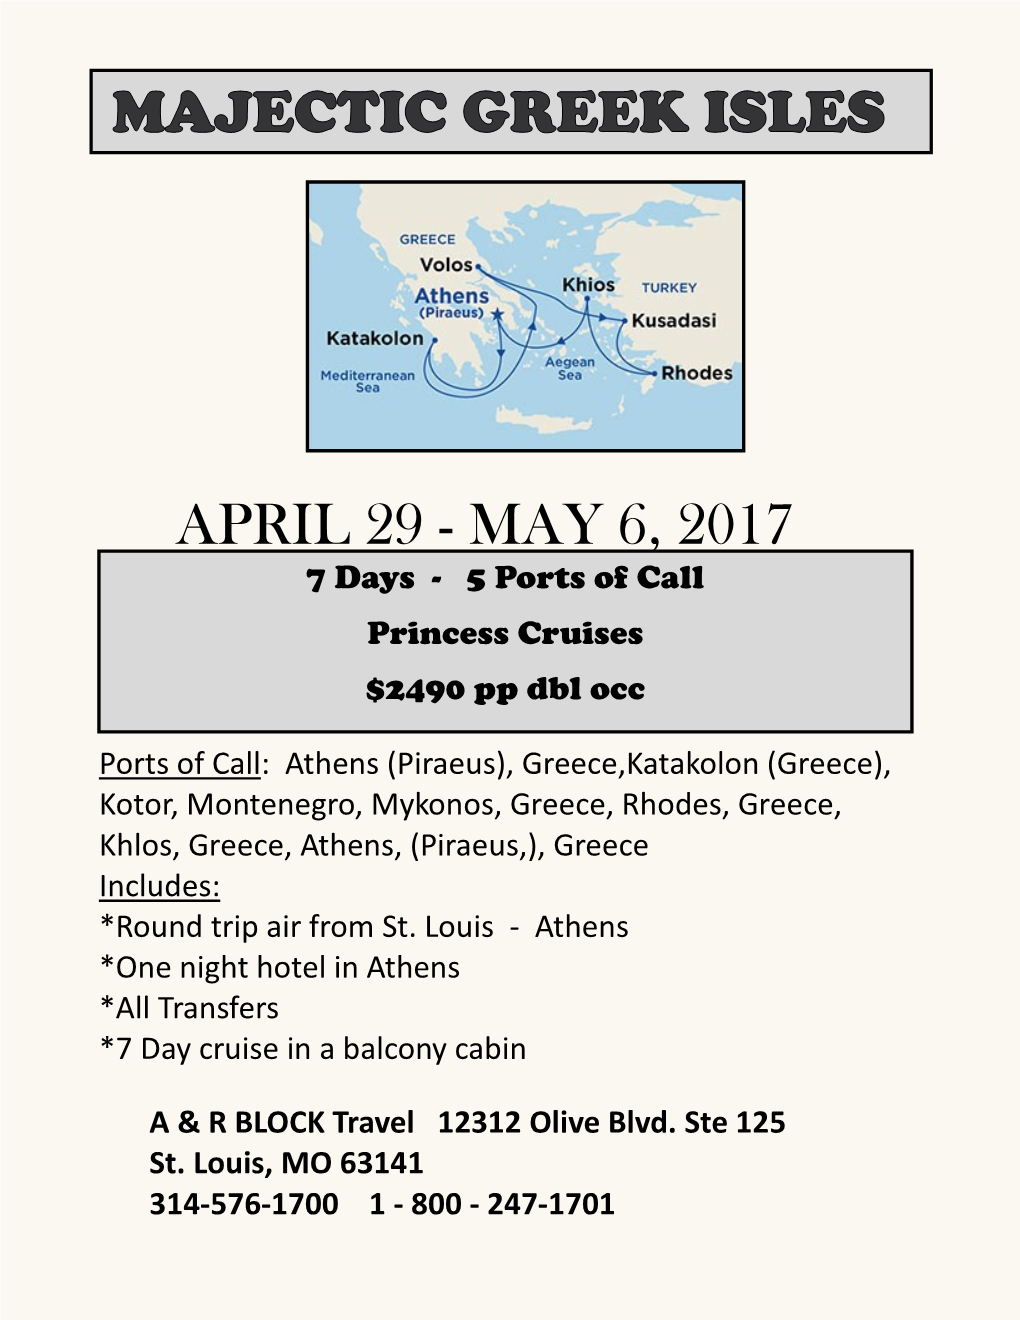 APRIL 29 - MAY 6, 2017 7 Days - 5 Ports of Call Princess Cruises $2490 Pp Dbl Occ